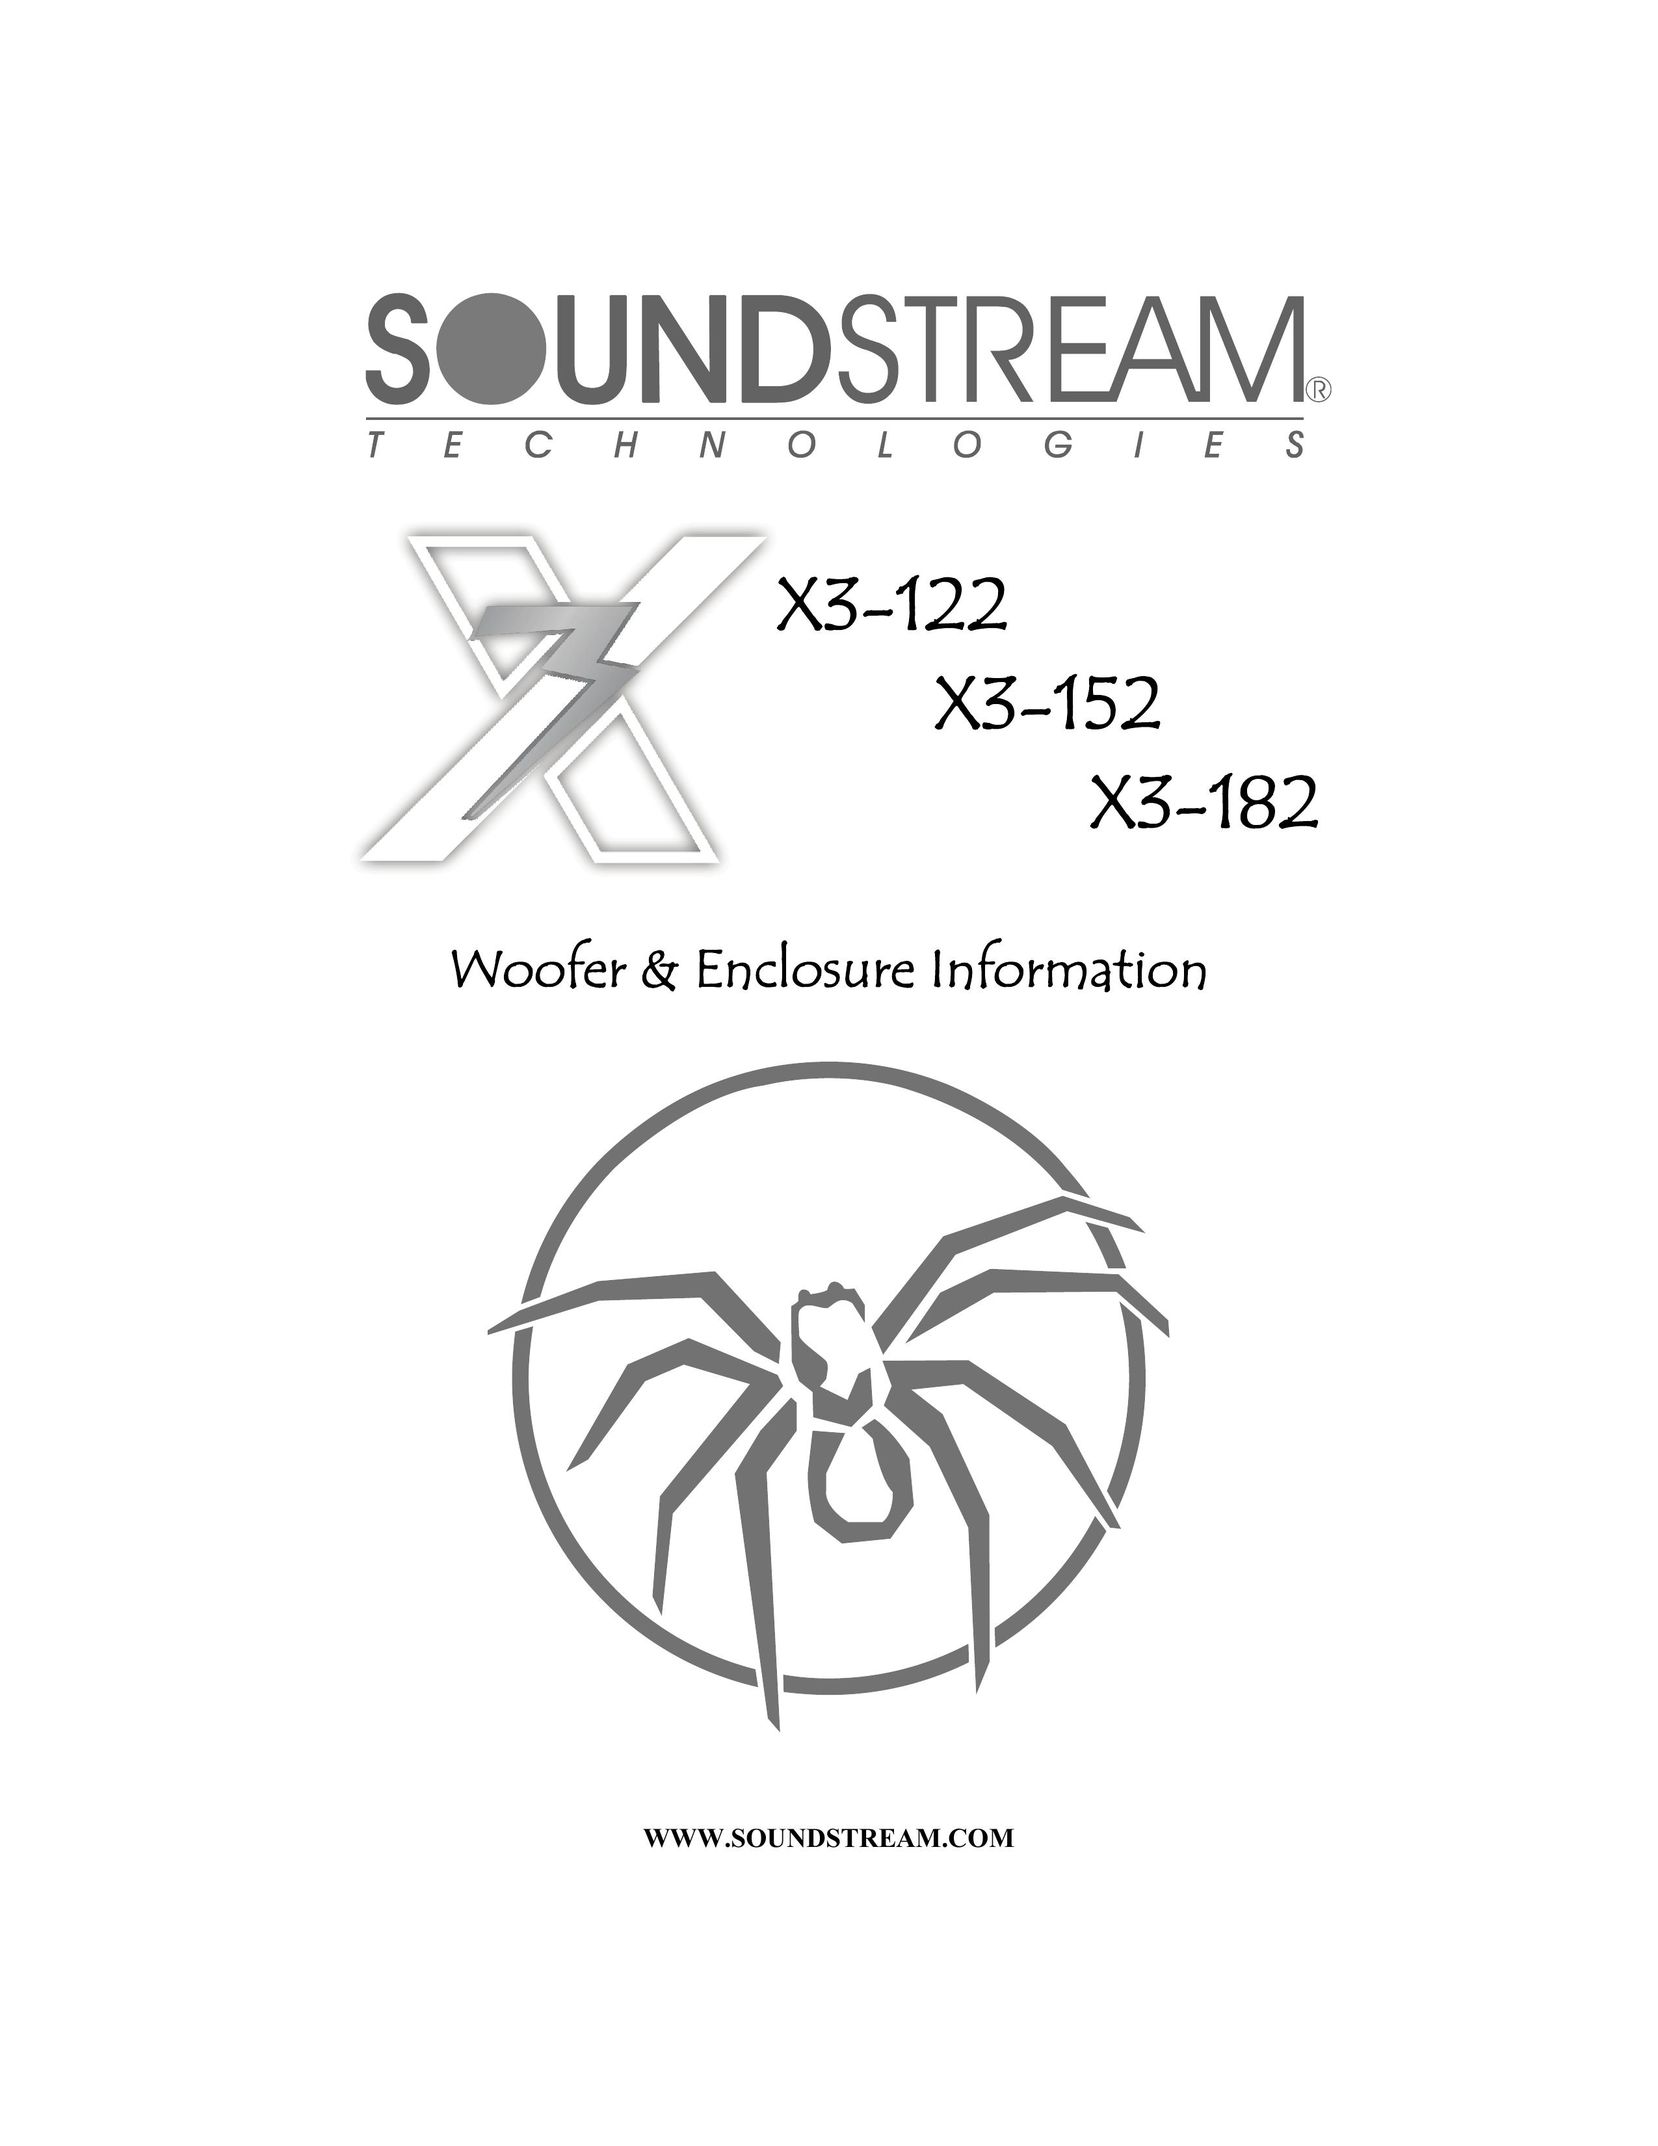 Soundstream Technologies X3-152 Speaker User Manual